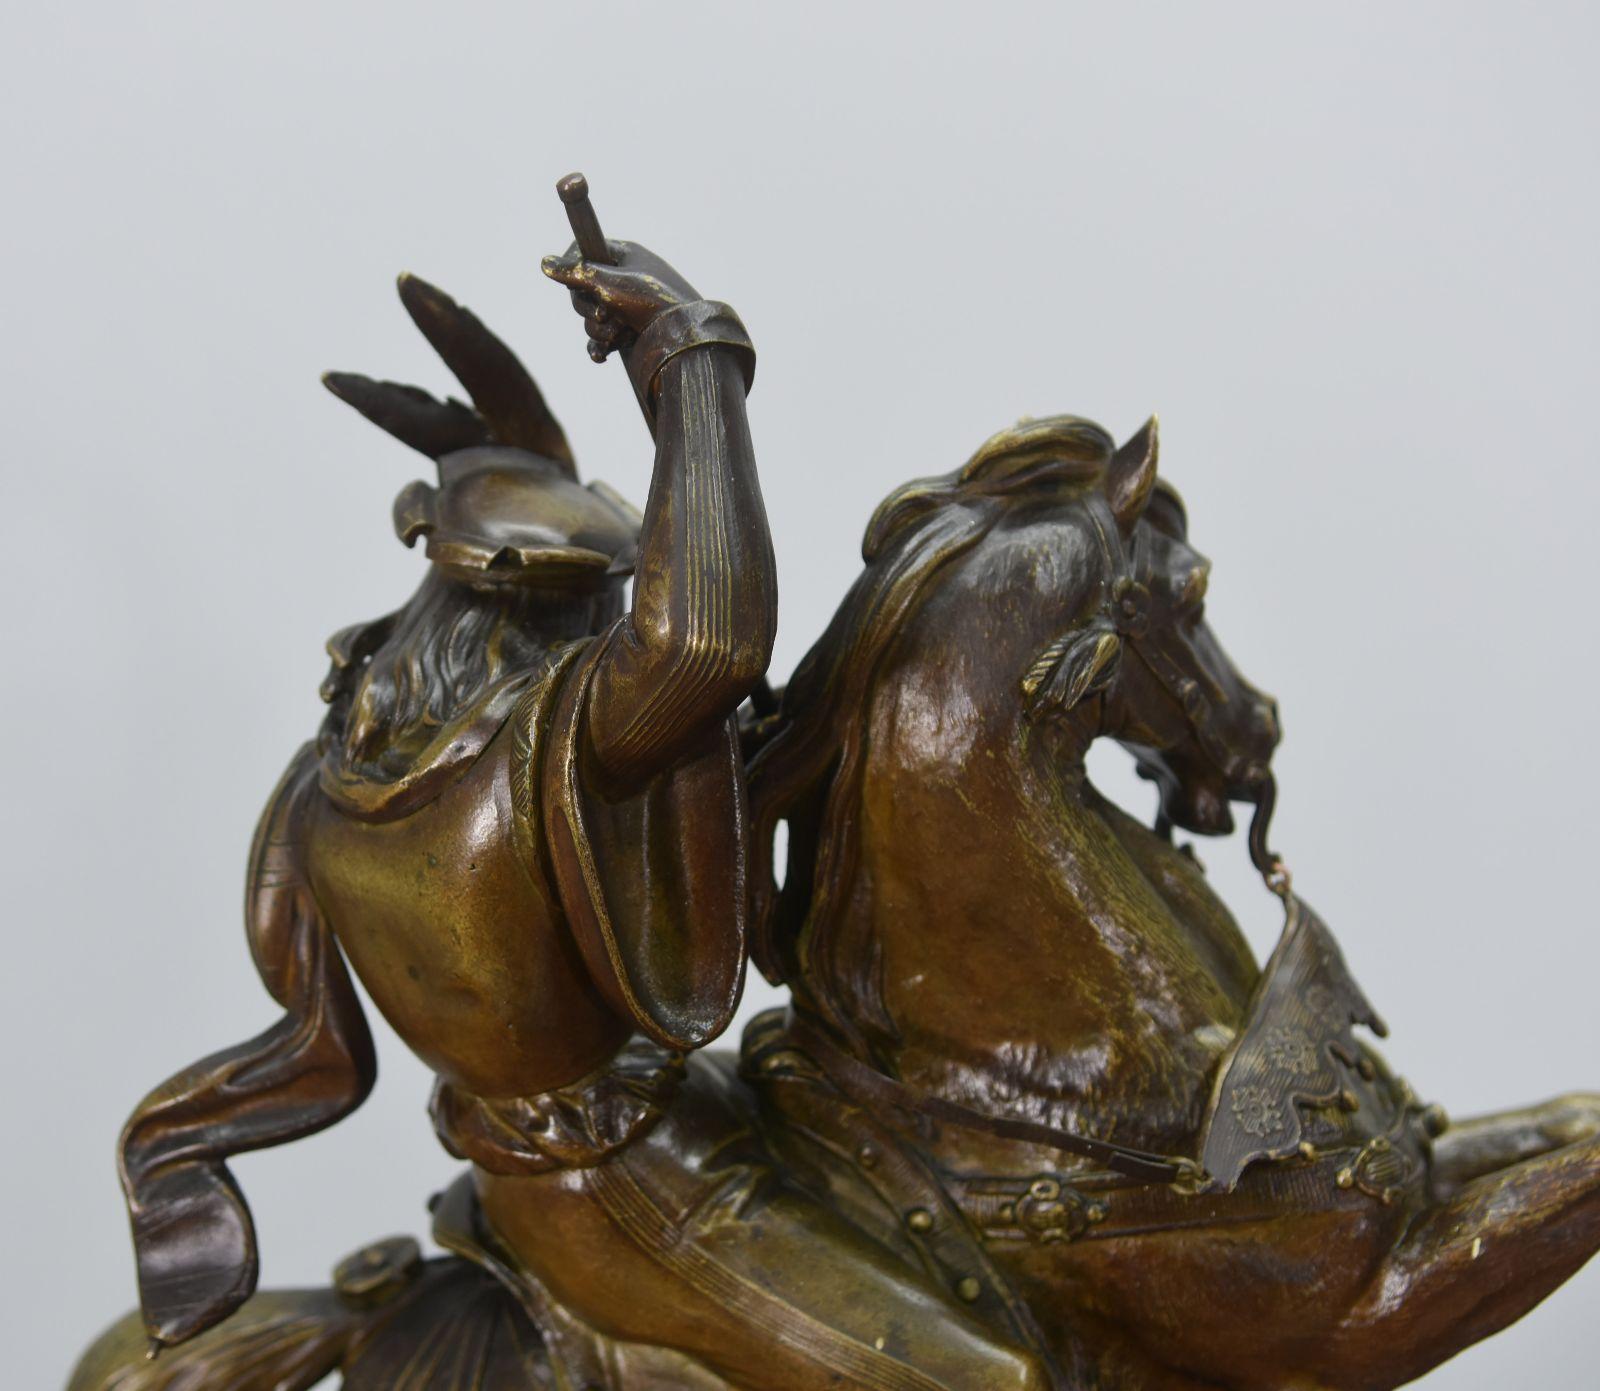 19th Century Bronze Sculpture by J.F.T Gechter Representing Quentin Durward 1